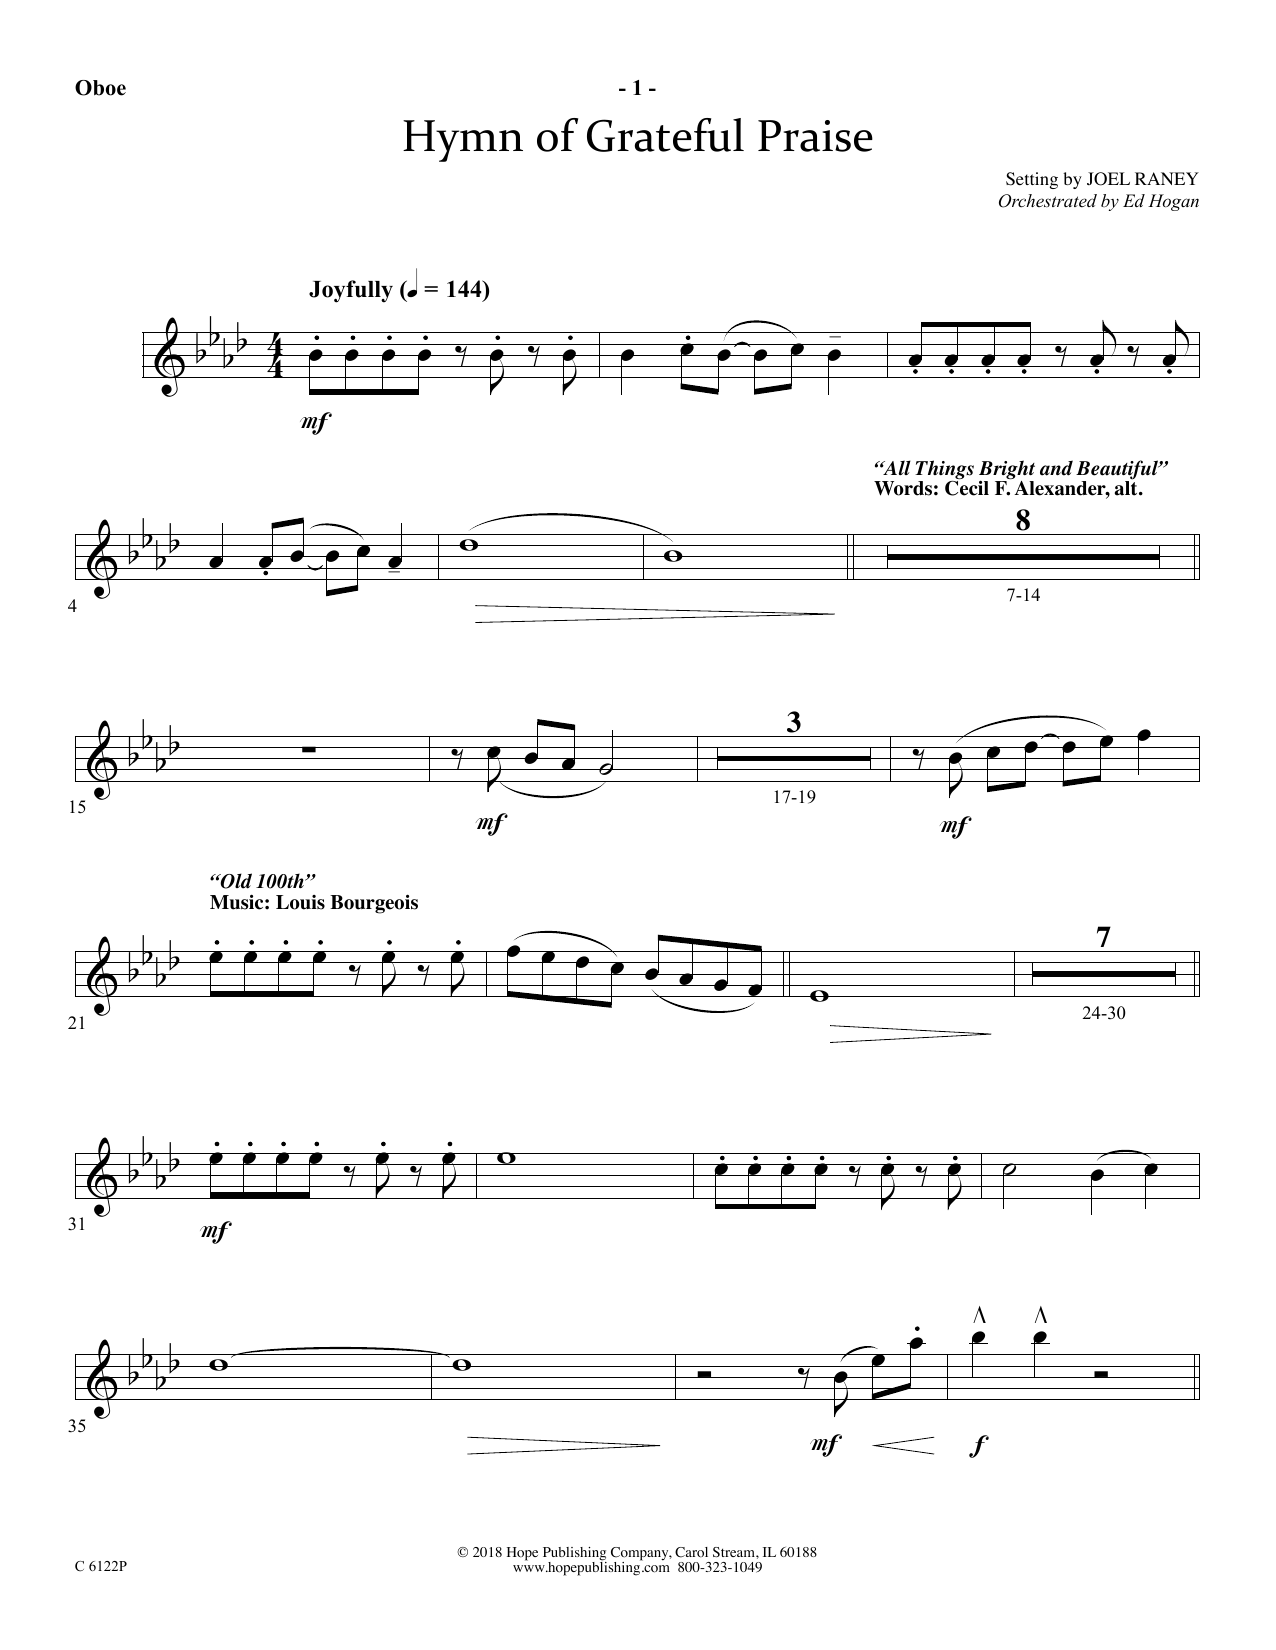 Joel Raney Hymn Of Grateful Praise - Oboe Sheet Music Notes & Chords for Choir Instrumental Pak - Download or Print PDF